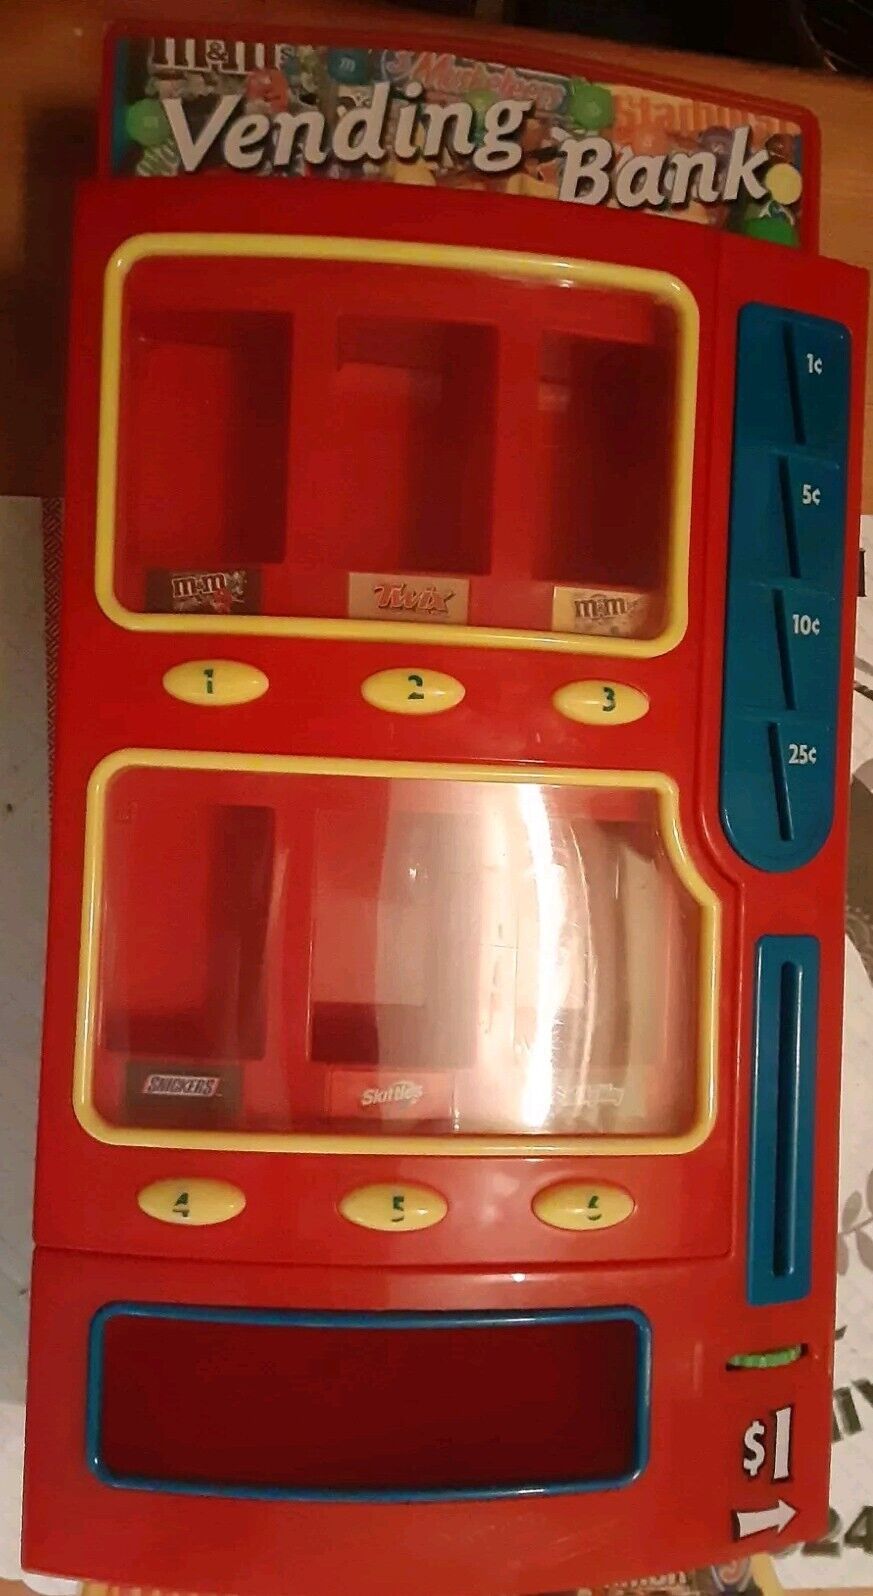 M&M's Candy Vending Machine Bank Snickers Twix Skittles Fun Size Mars